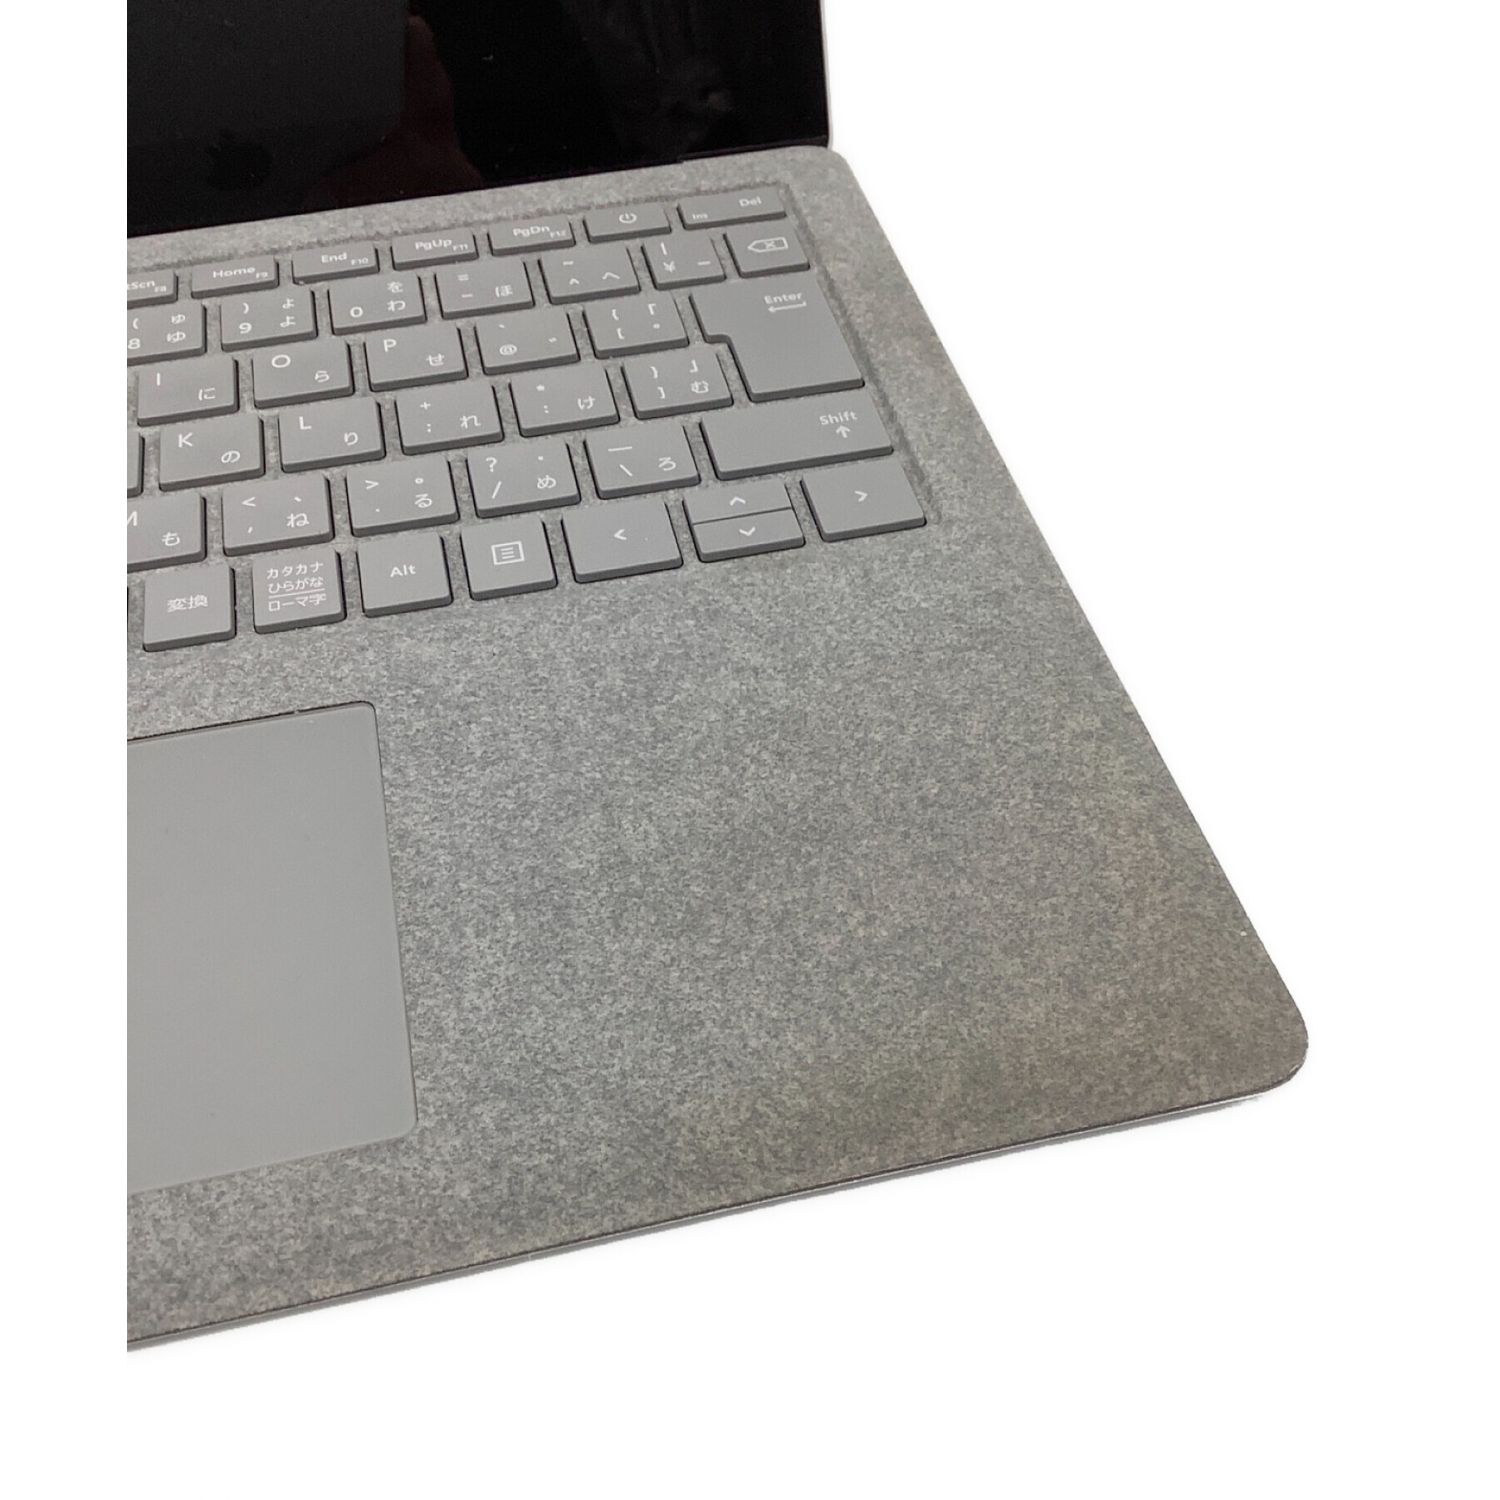 Microsoft (マイクロソフト) Surface Laptop 1769 Core i5 メモリ:8GB ...